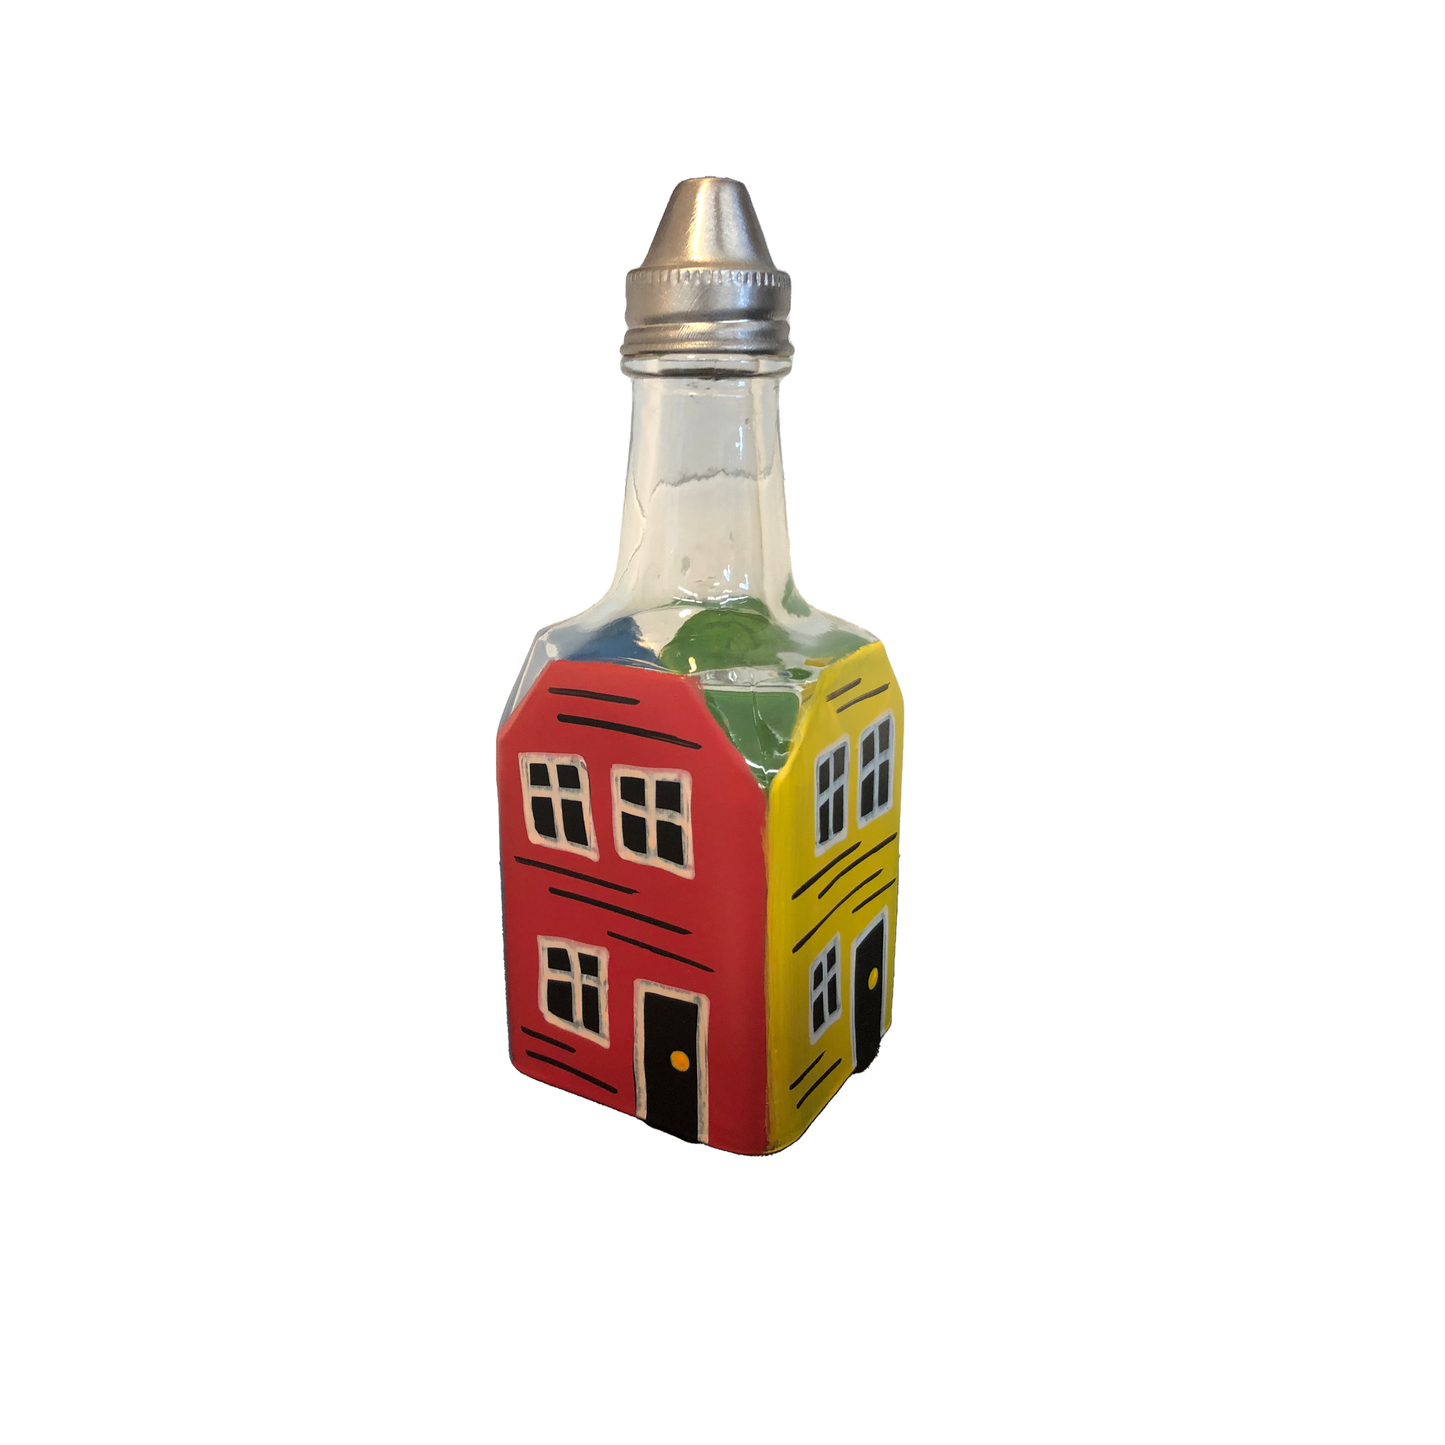 Hand-Painted Jellybean Row House Vinegar Bottle